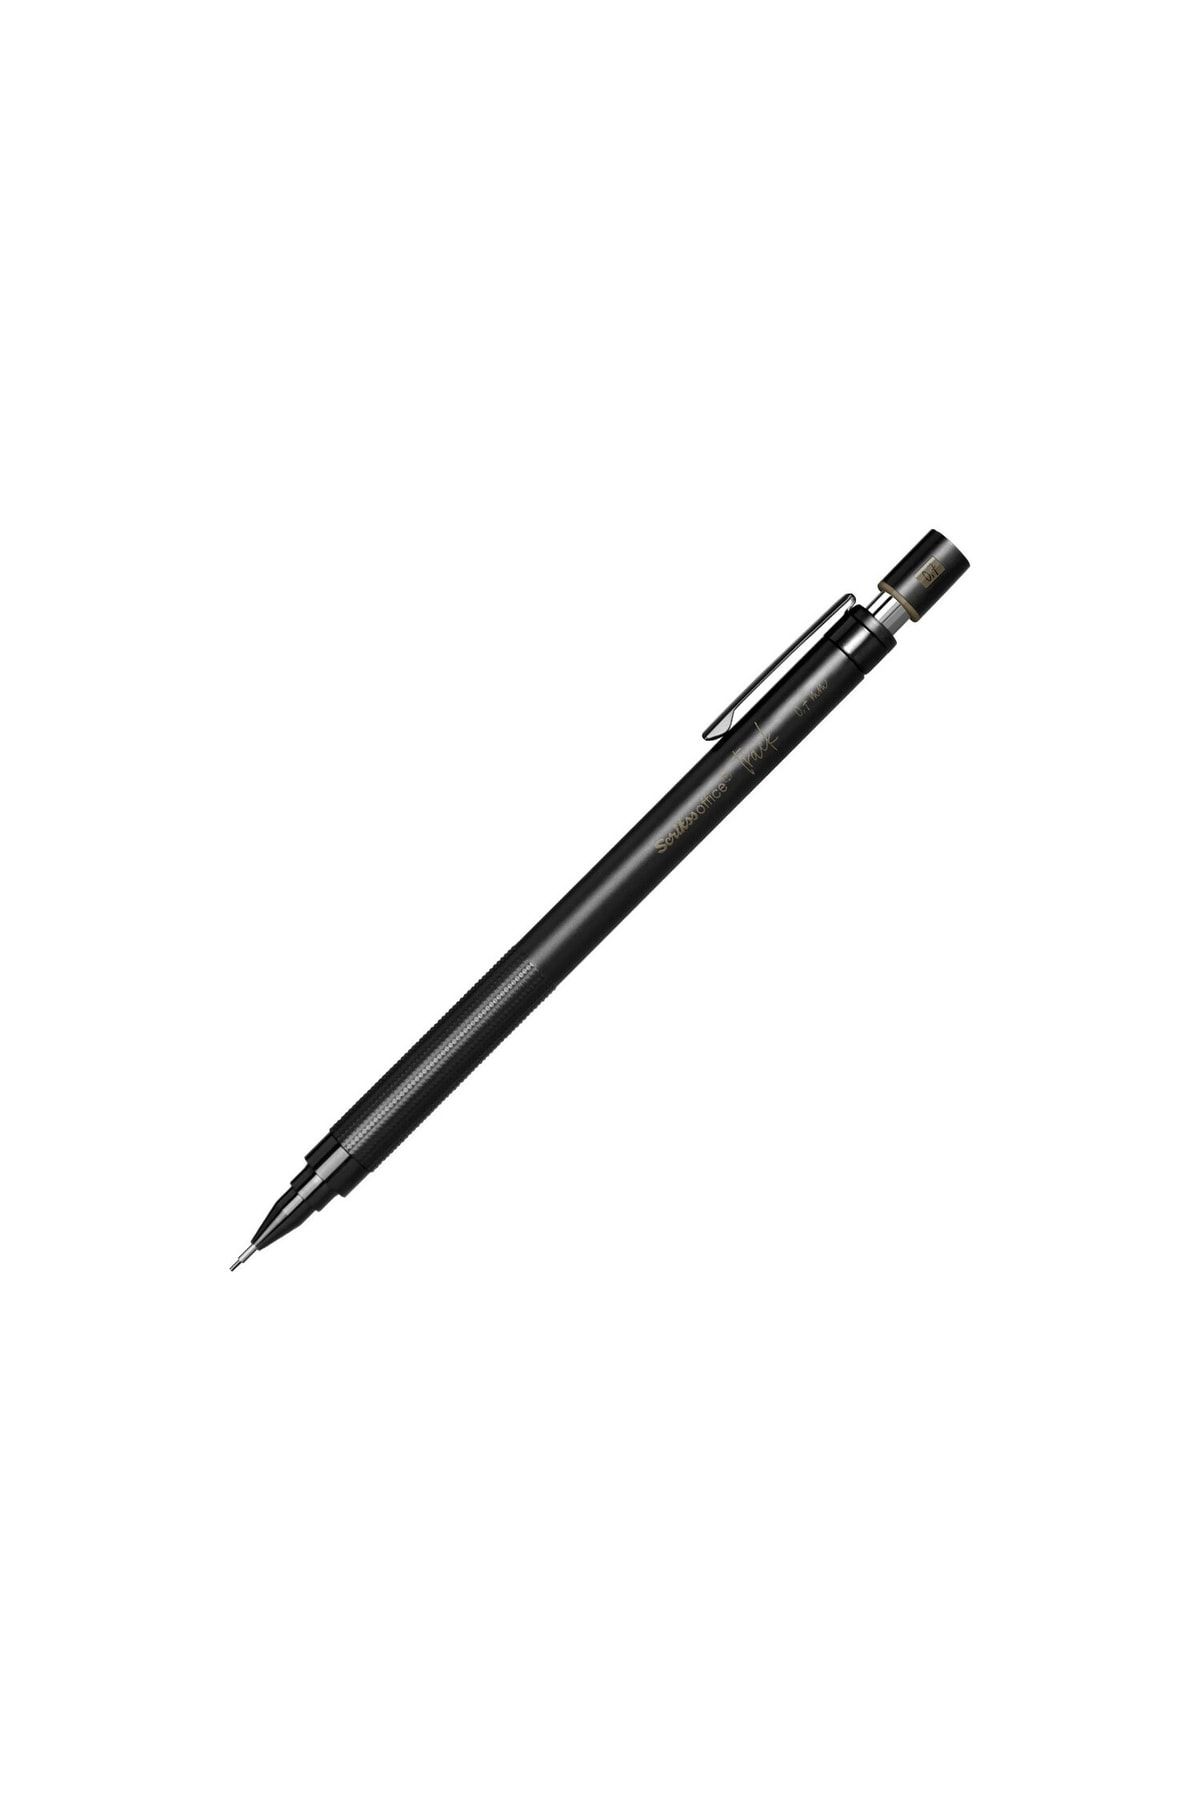 Scrikss Versatil kalem (mekanik Kurşun Kalem) Track 0.7 Mm Altın Sarı t0sbcctr71230a (12 Li Paket)